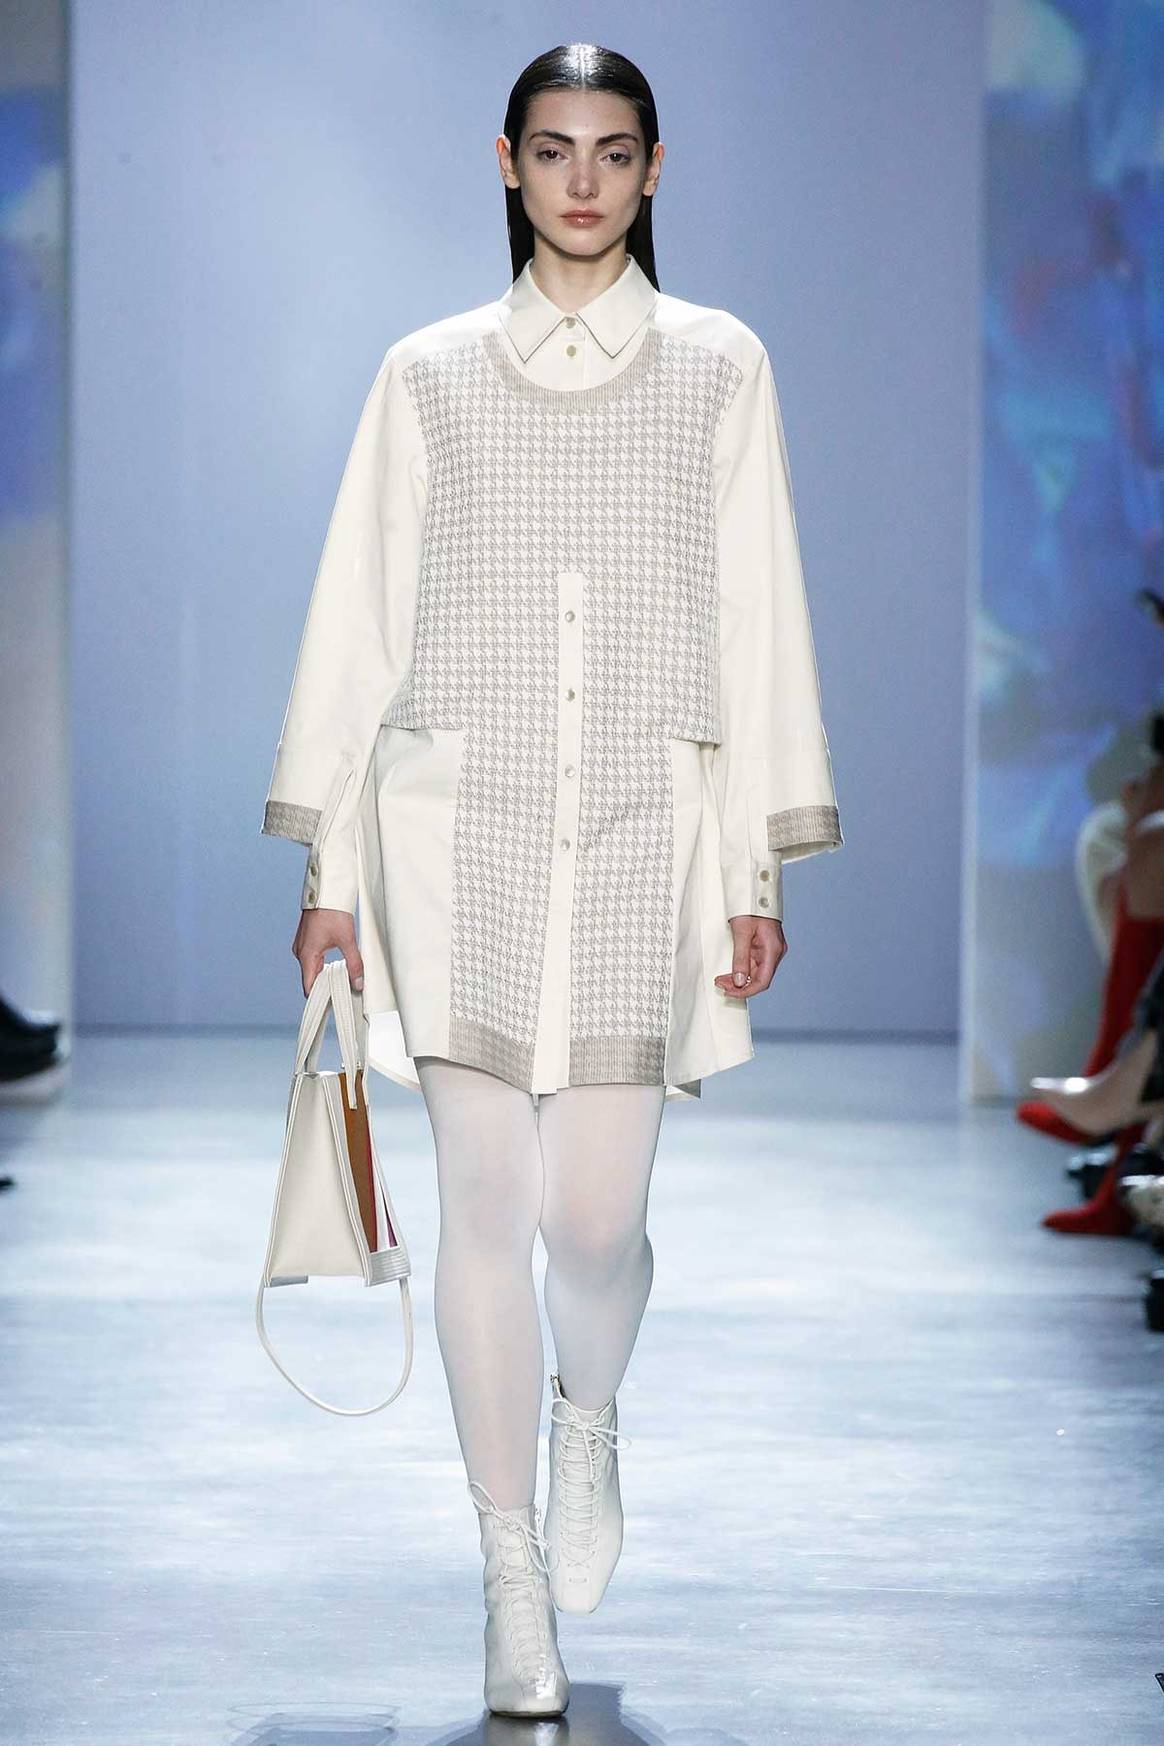 Is Korean fashion America's next mainstream frontier?